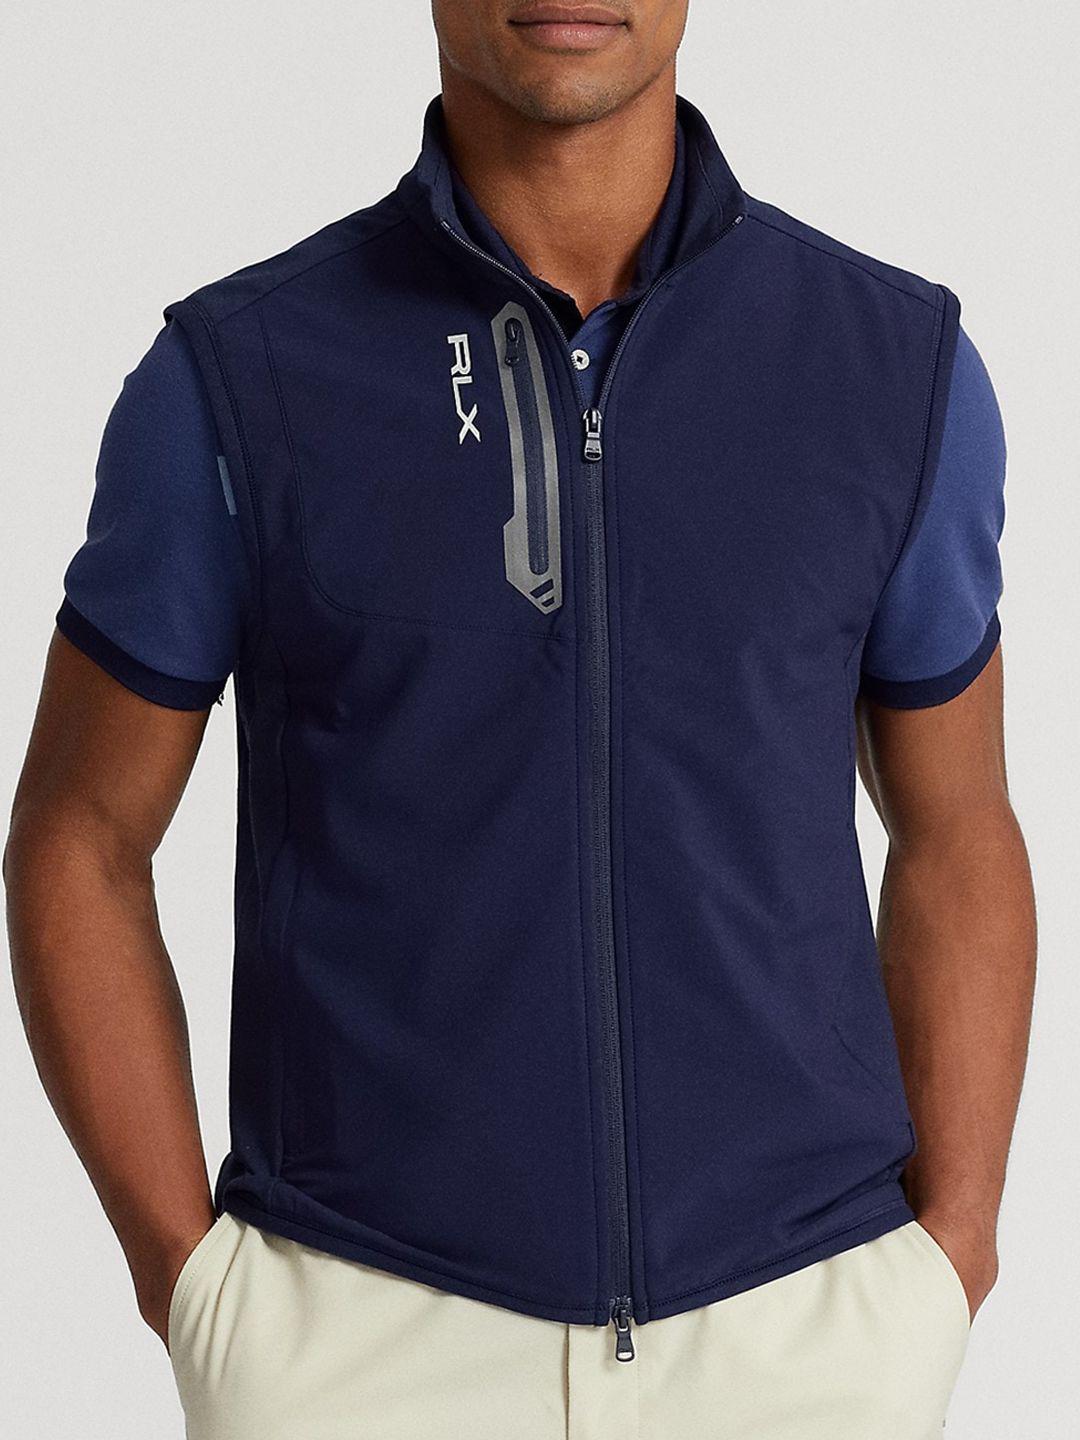 polo ralph lauren brand logo printed cotton stand collar sleeveless sporty jacket